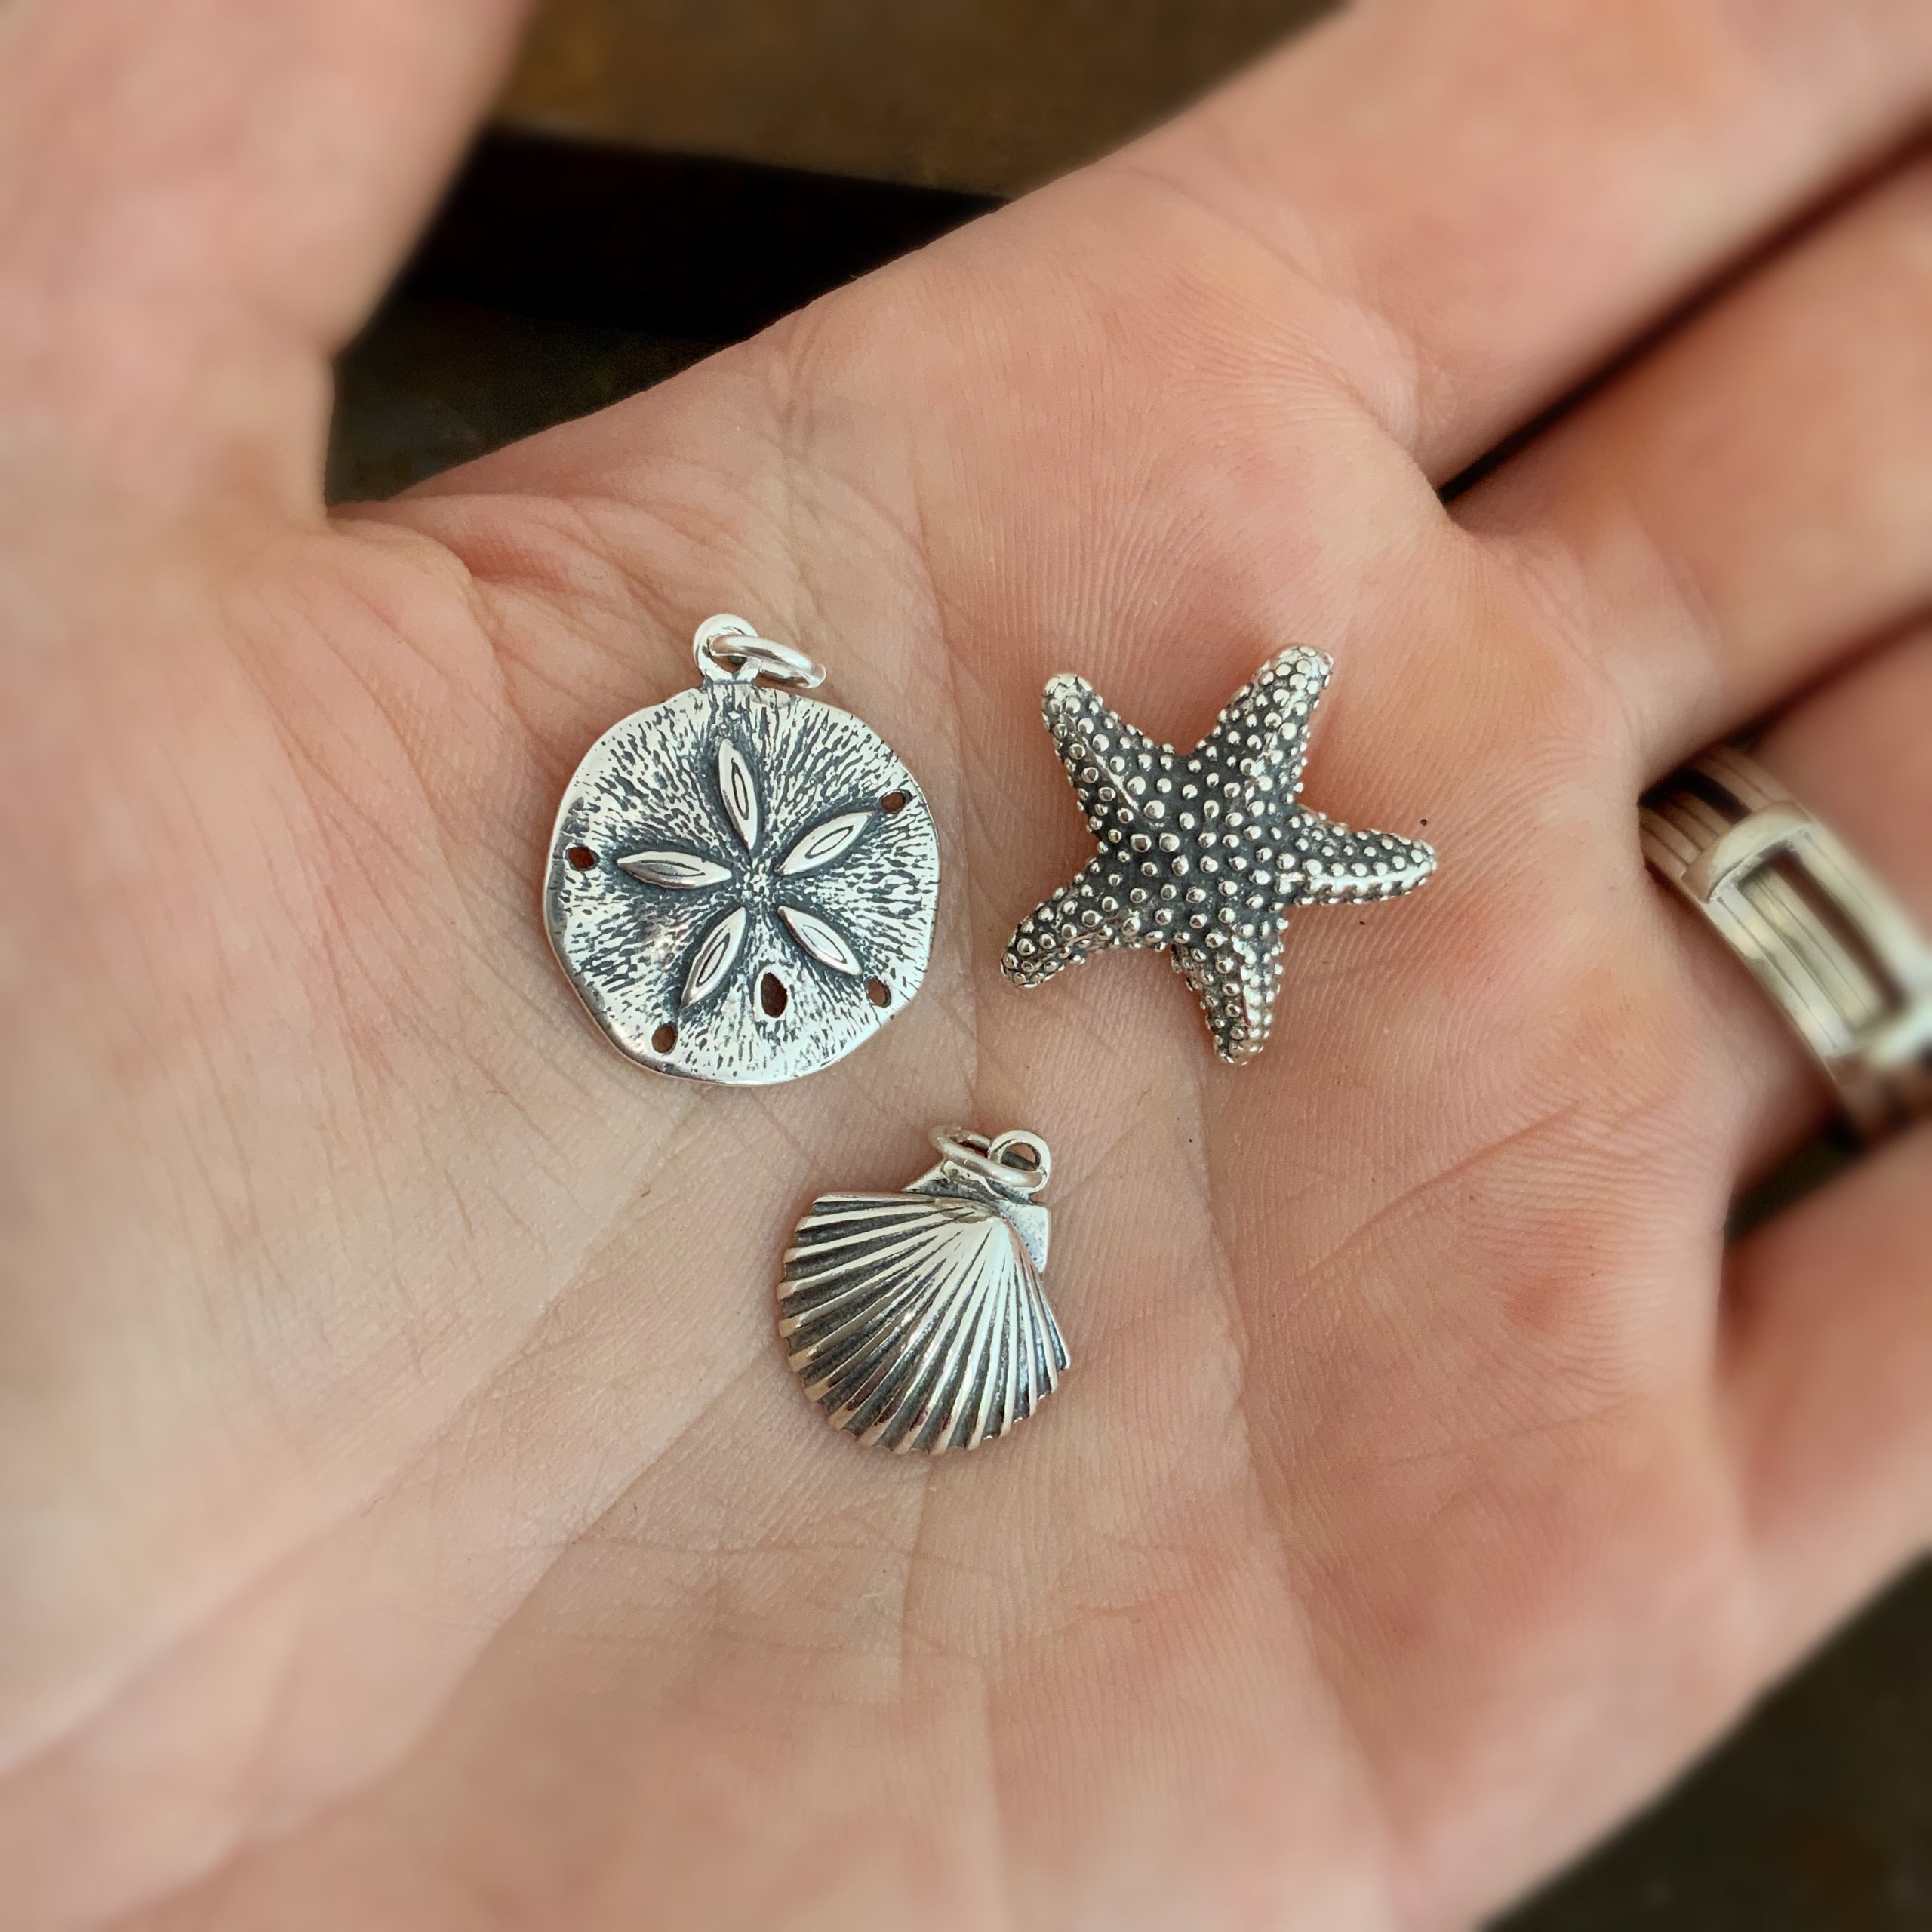 Sea Charms Bulk Lot Ocean Jewelry Making Supplies Beach Themed Silver 100pcs